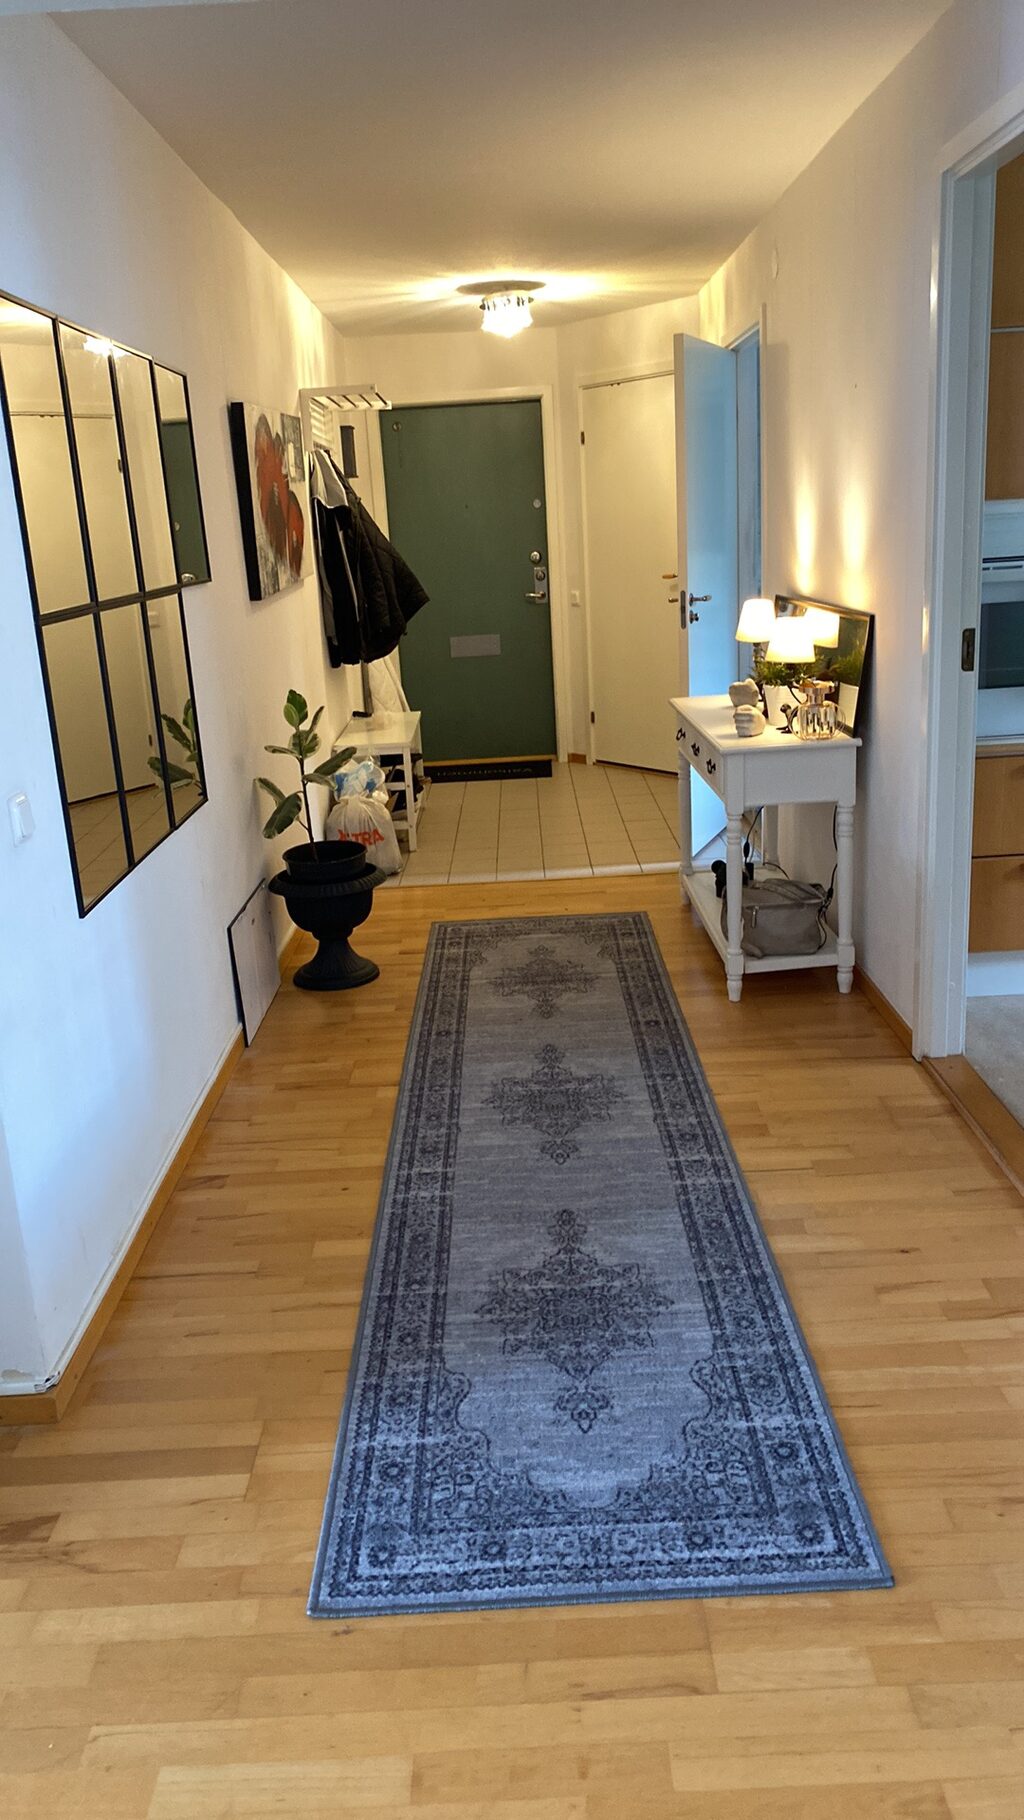 Lägenhetsbyte - Bymolnsgatan 1, 418 42 Göteborg